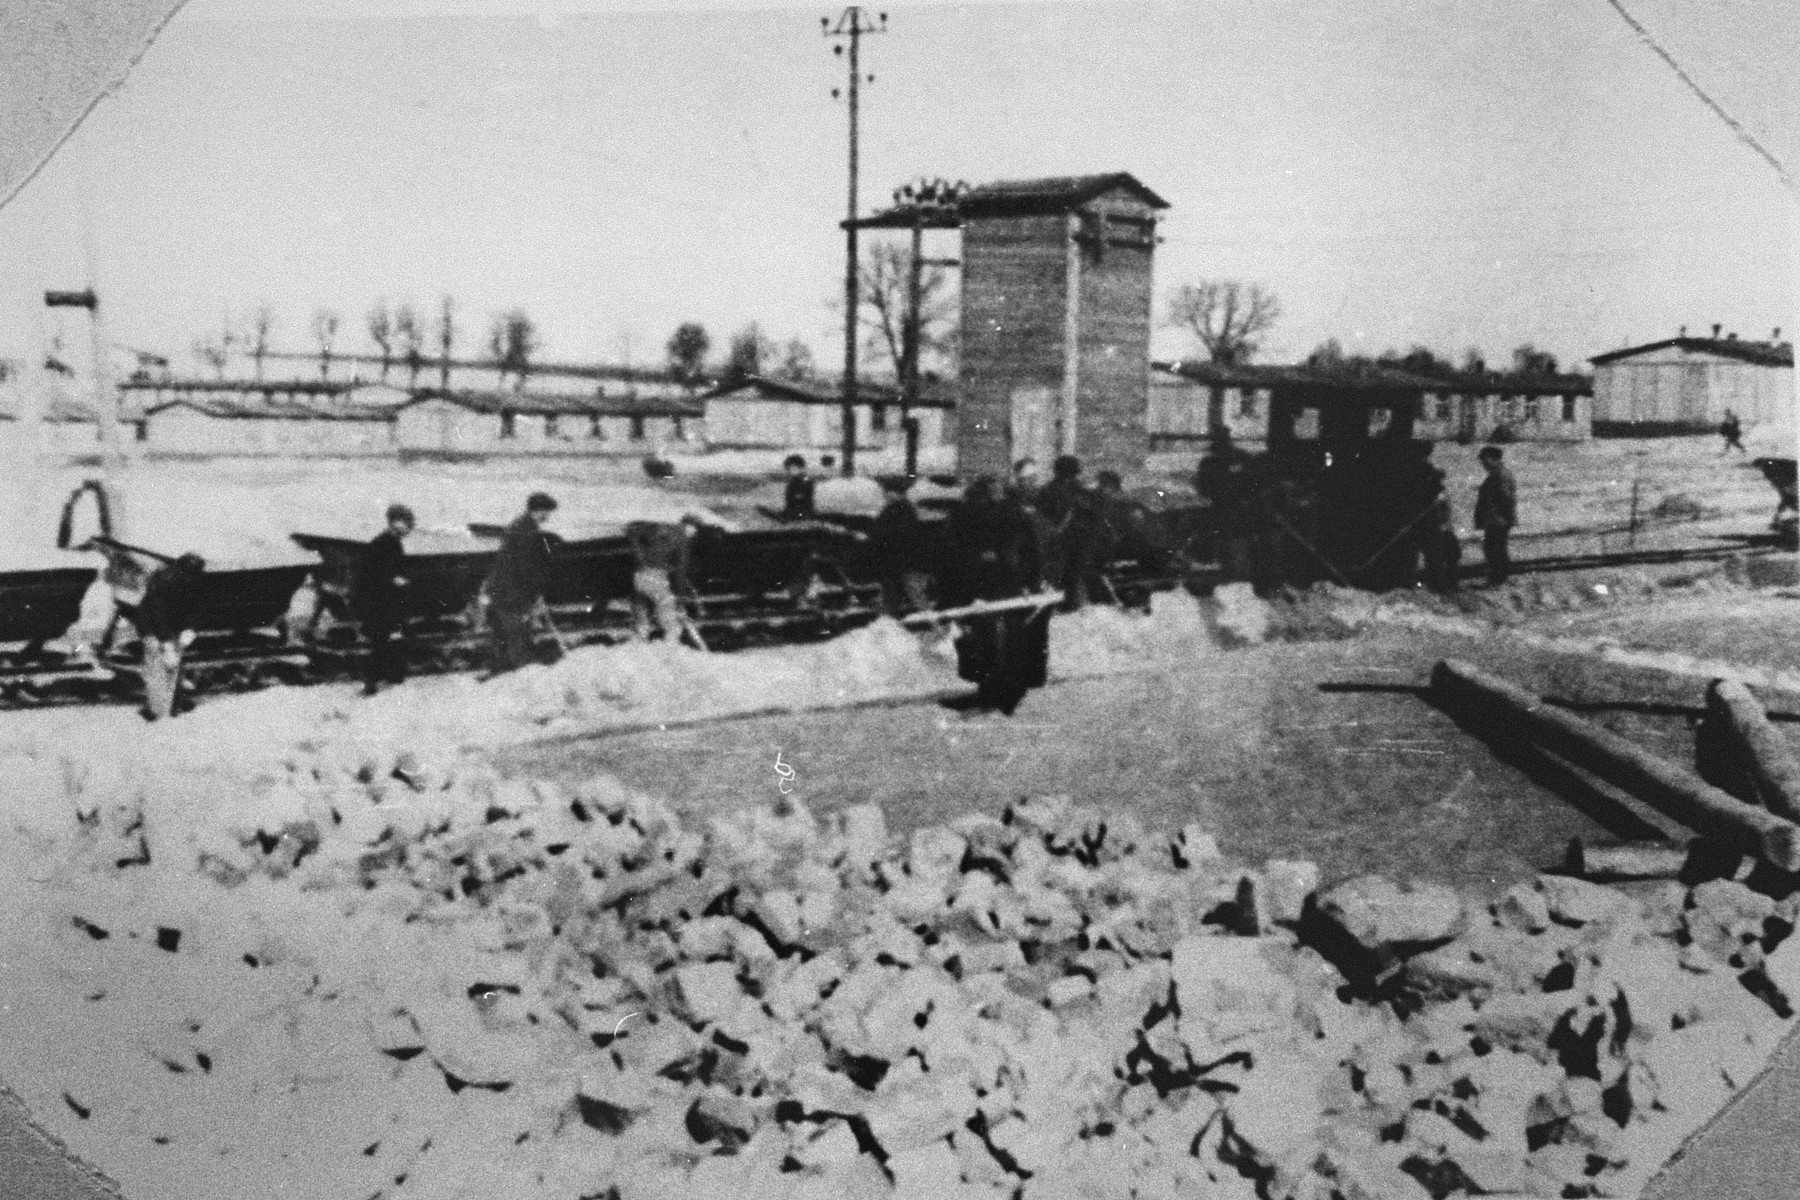 Prisoners at forced labor in the Majdanek concentration camp.